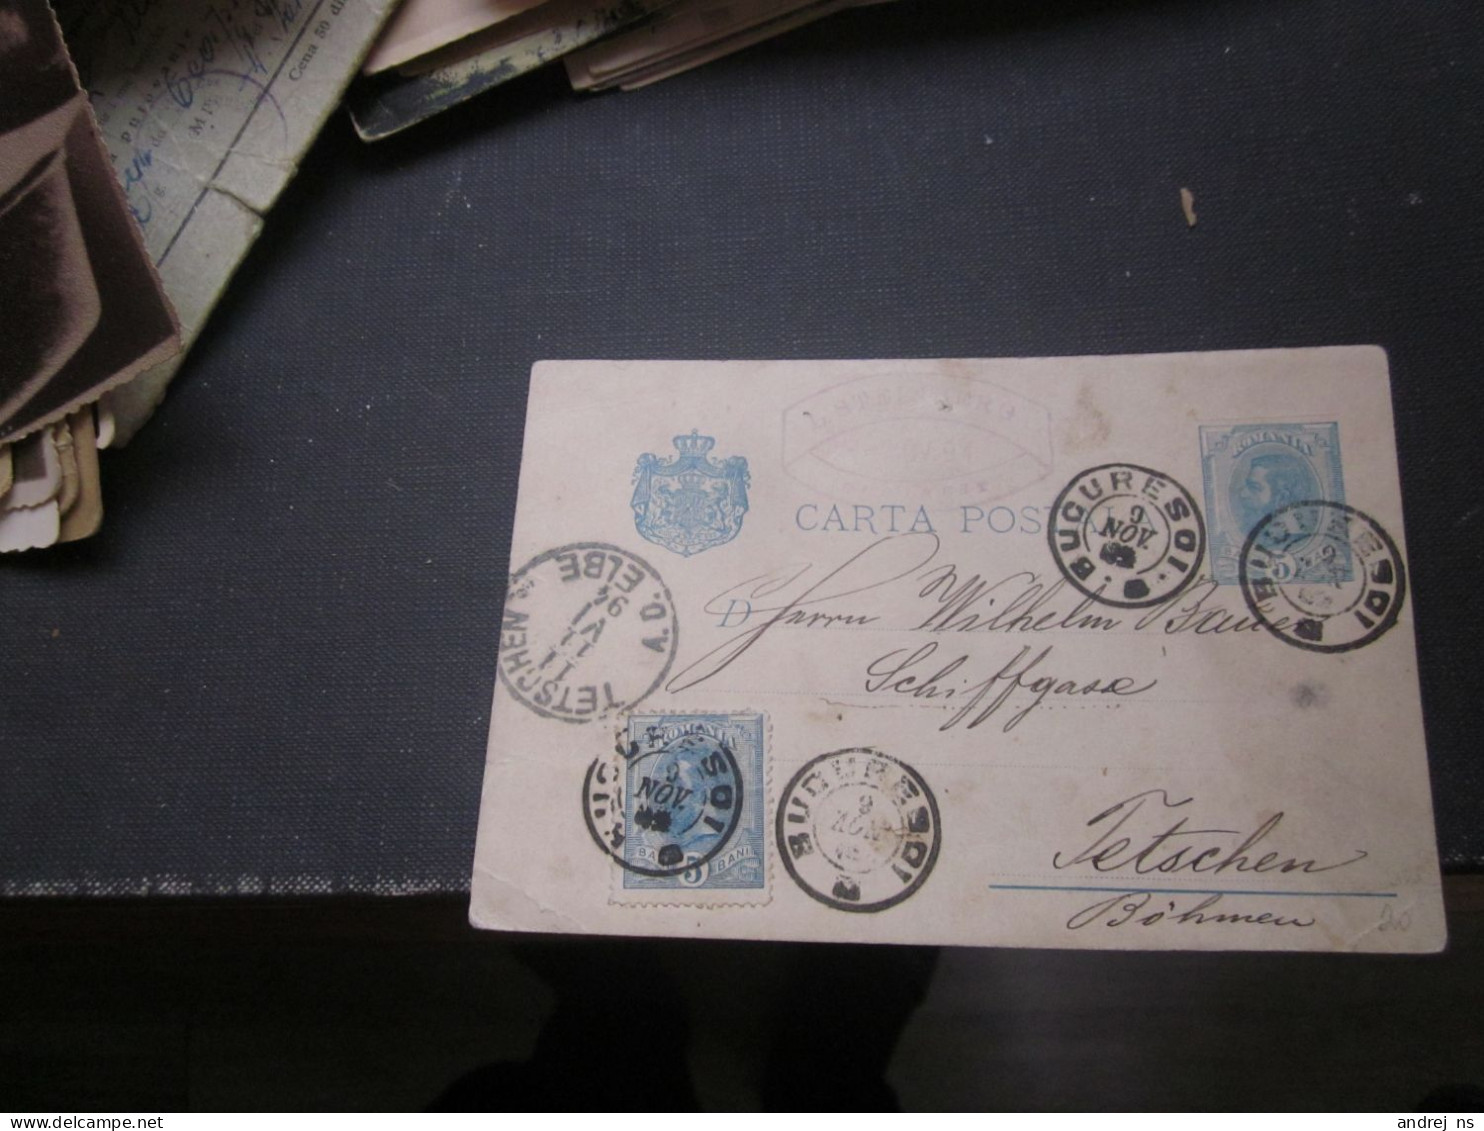 Carta Postala Bucuresti To Teschen 1894 - Covers & Documents